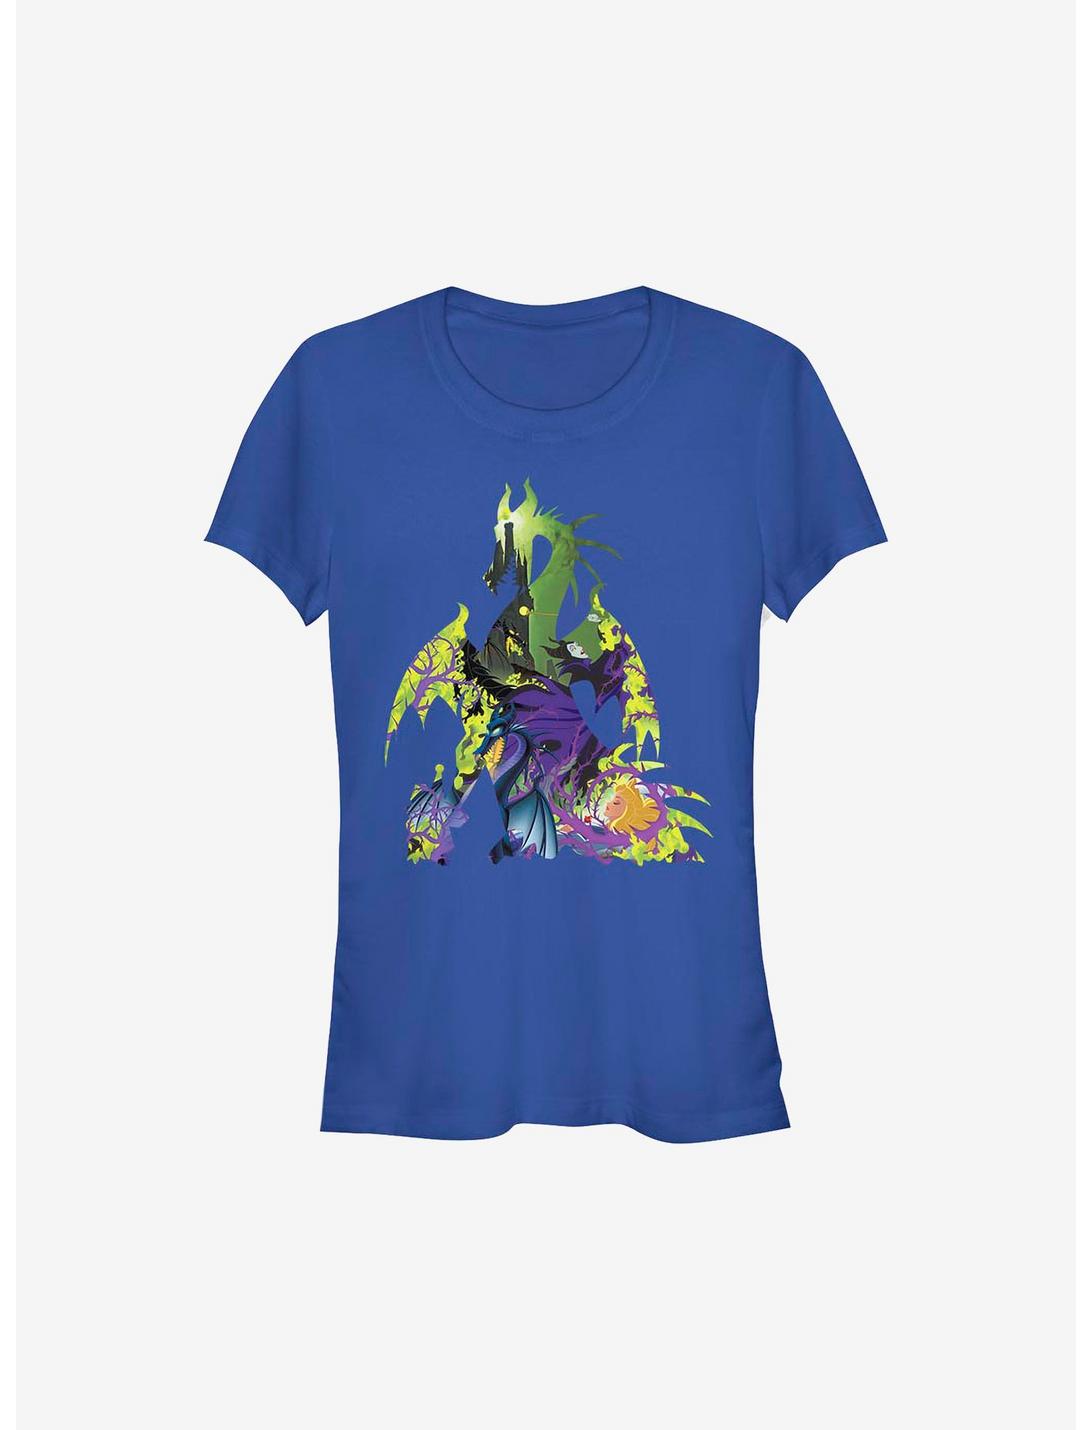 Disney Villains Maleficent Dragon Form Girls T-Shirt, ROYAL, hi-res